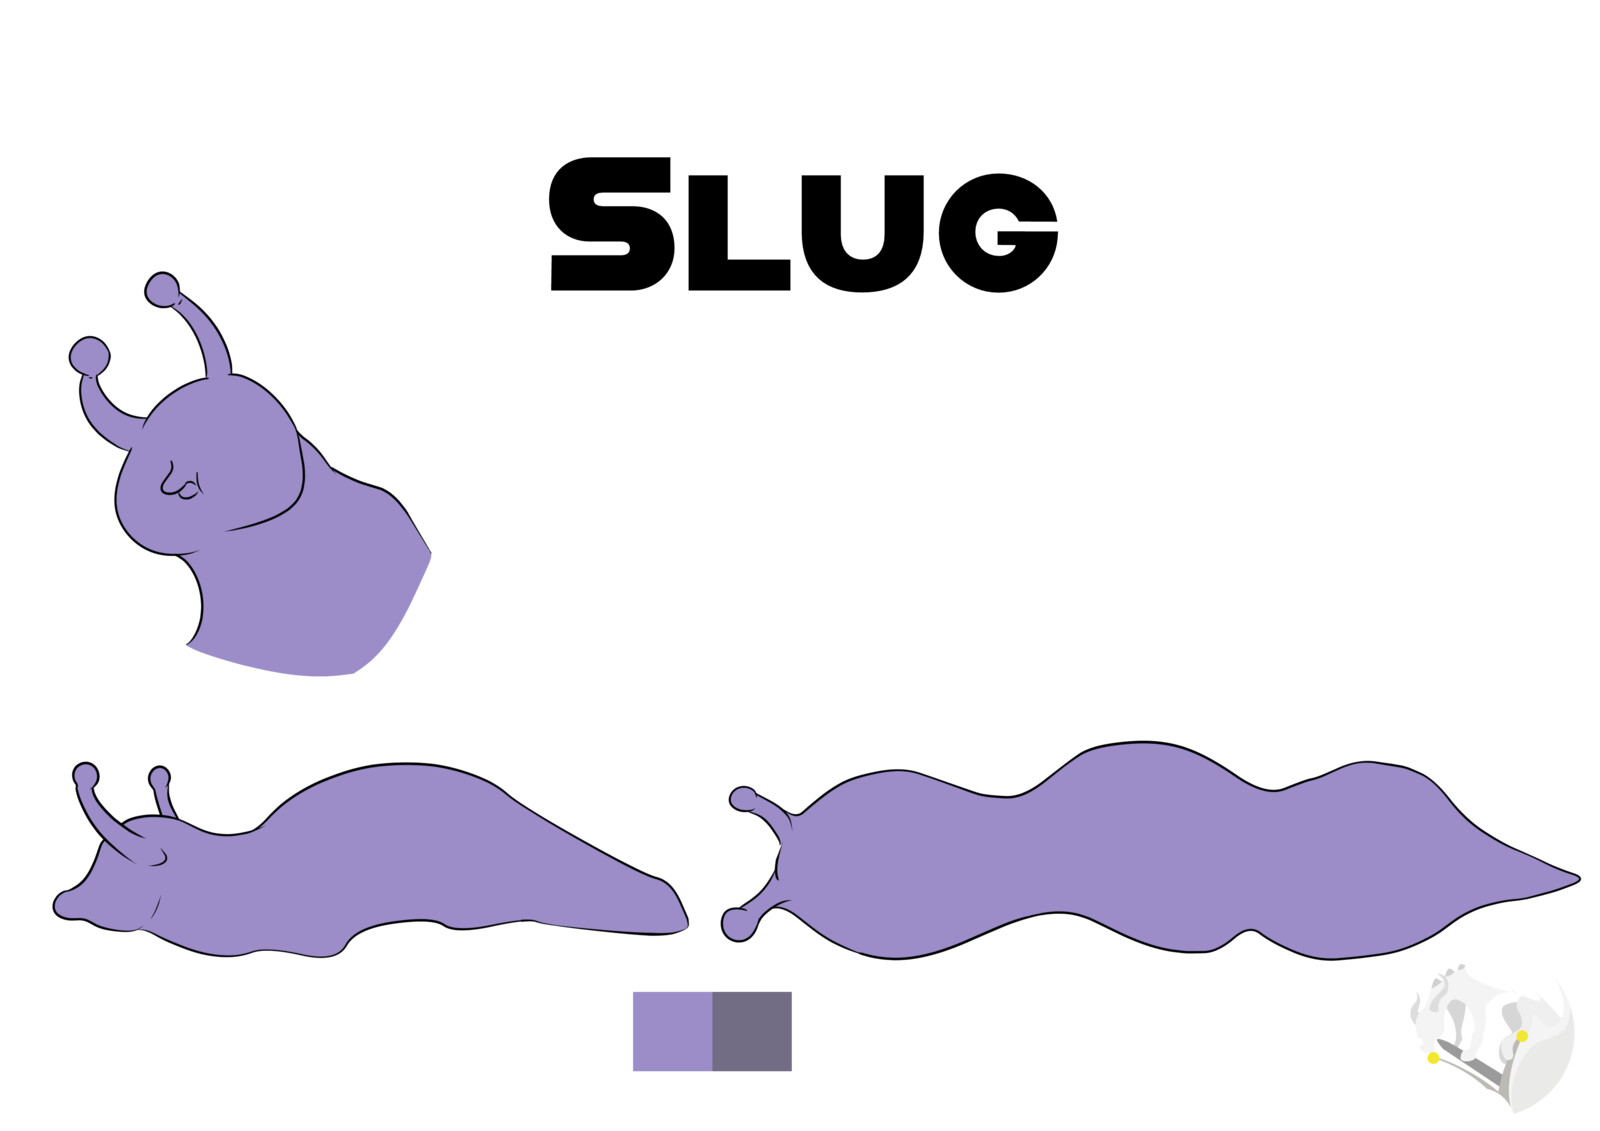 An slug alien as an enemy